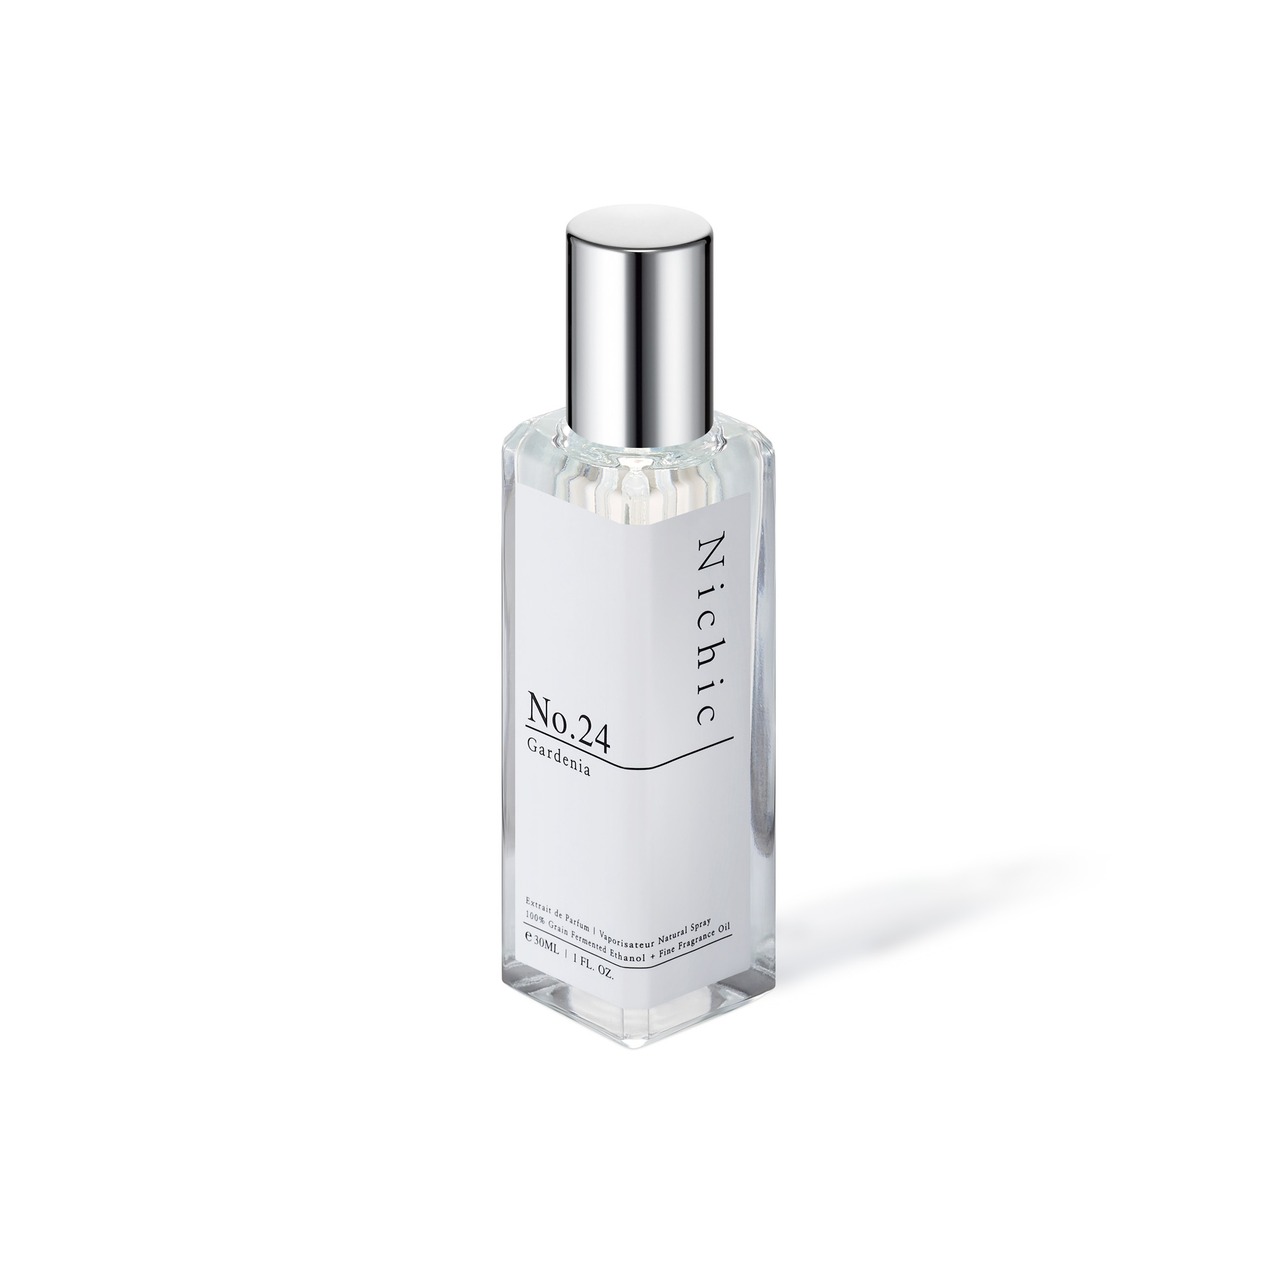 Nichic　Extrait de Parfum【No.24】Gardenia　30mL